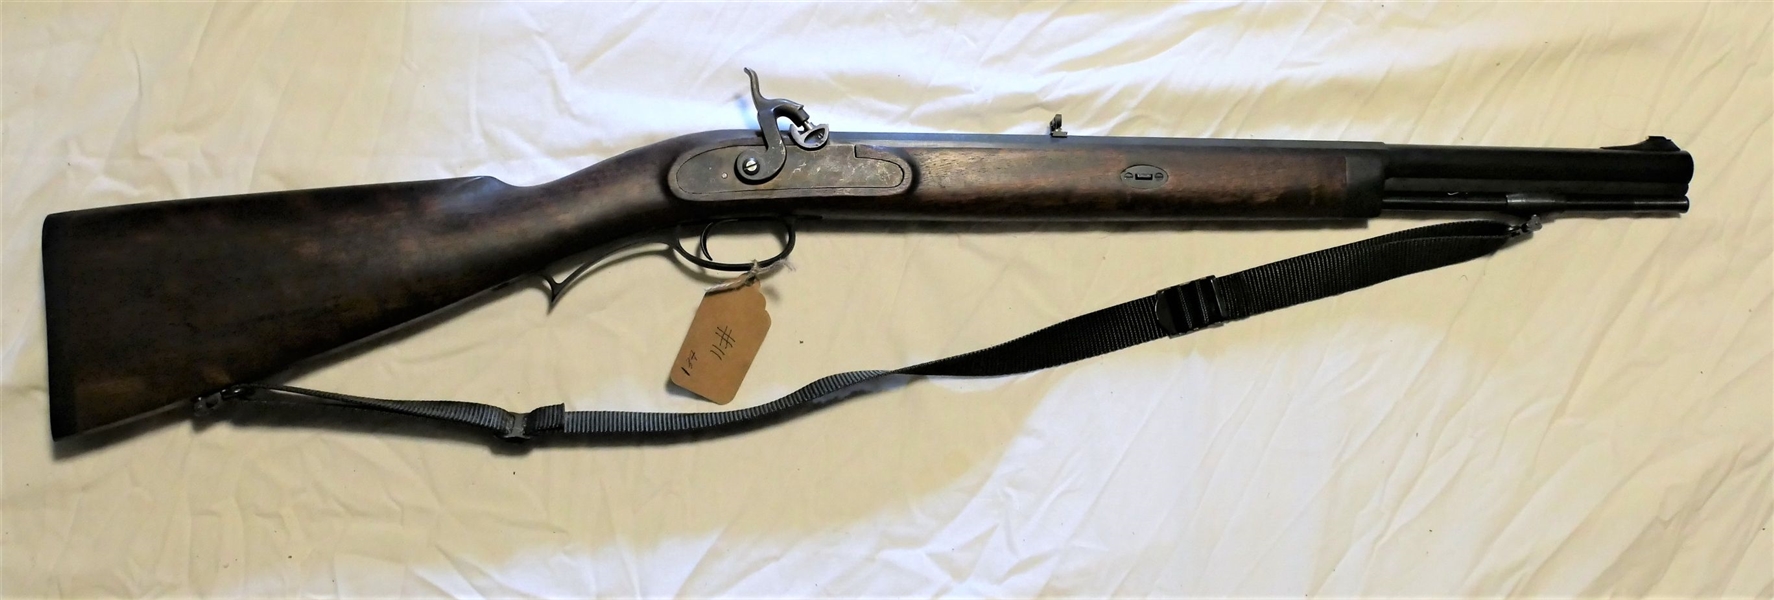 Lyman "Deer Stalker" .50 Caliber Black Powder Rifle